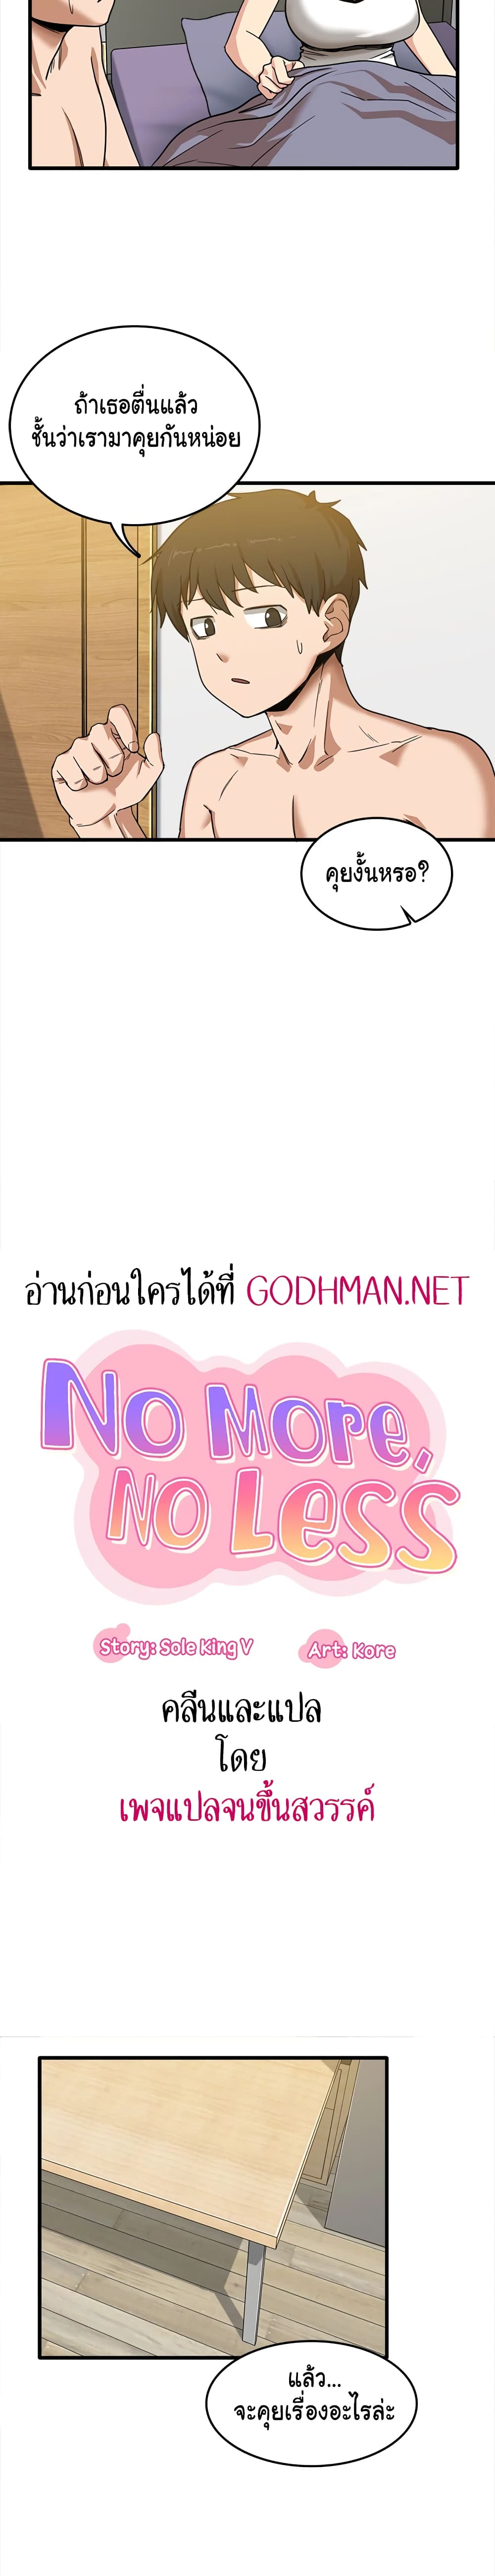 No More, No Less 2 (3)